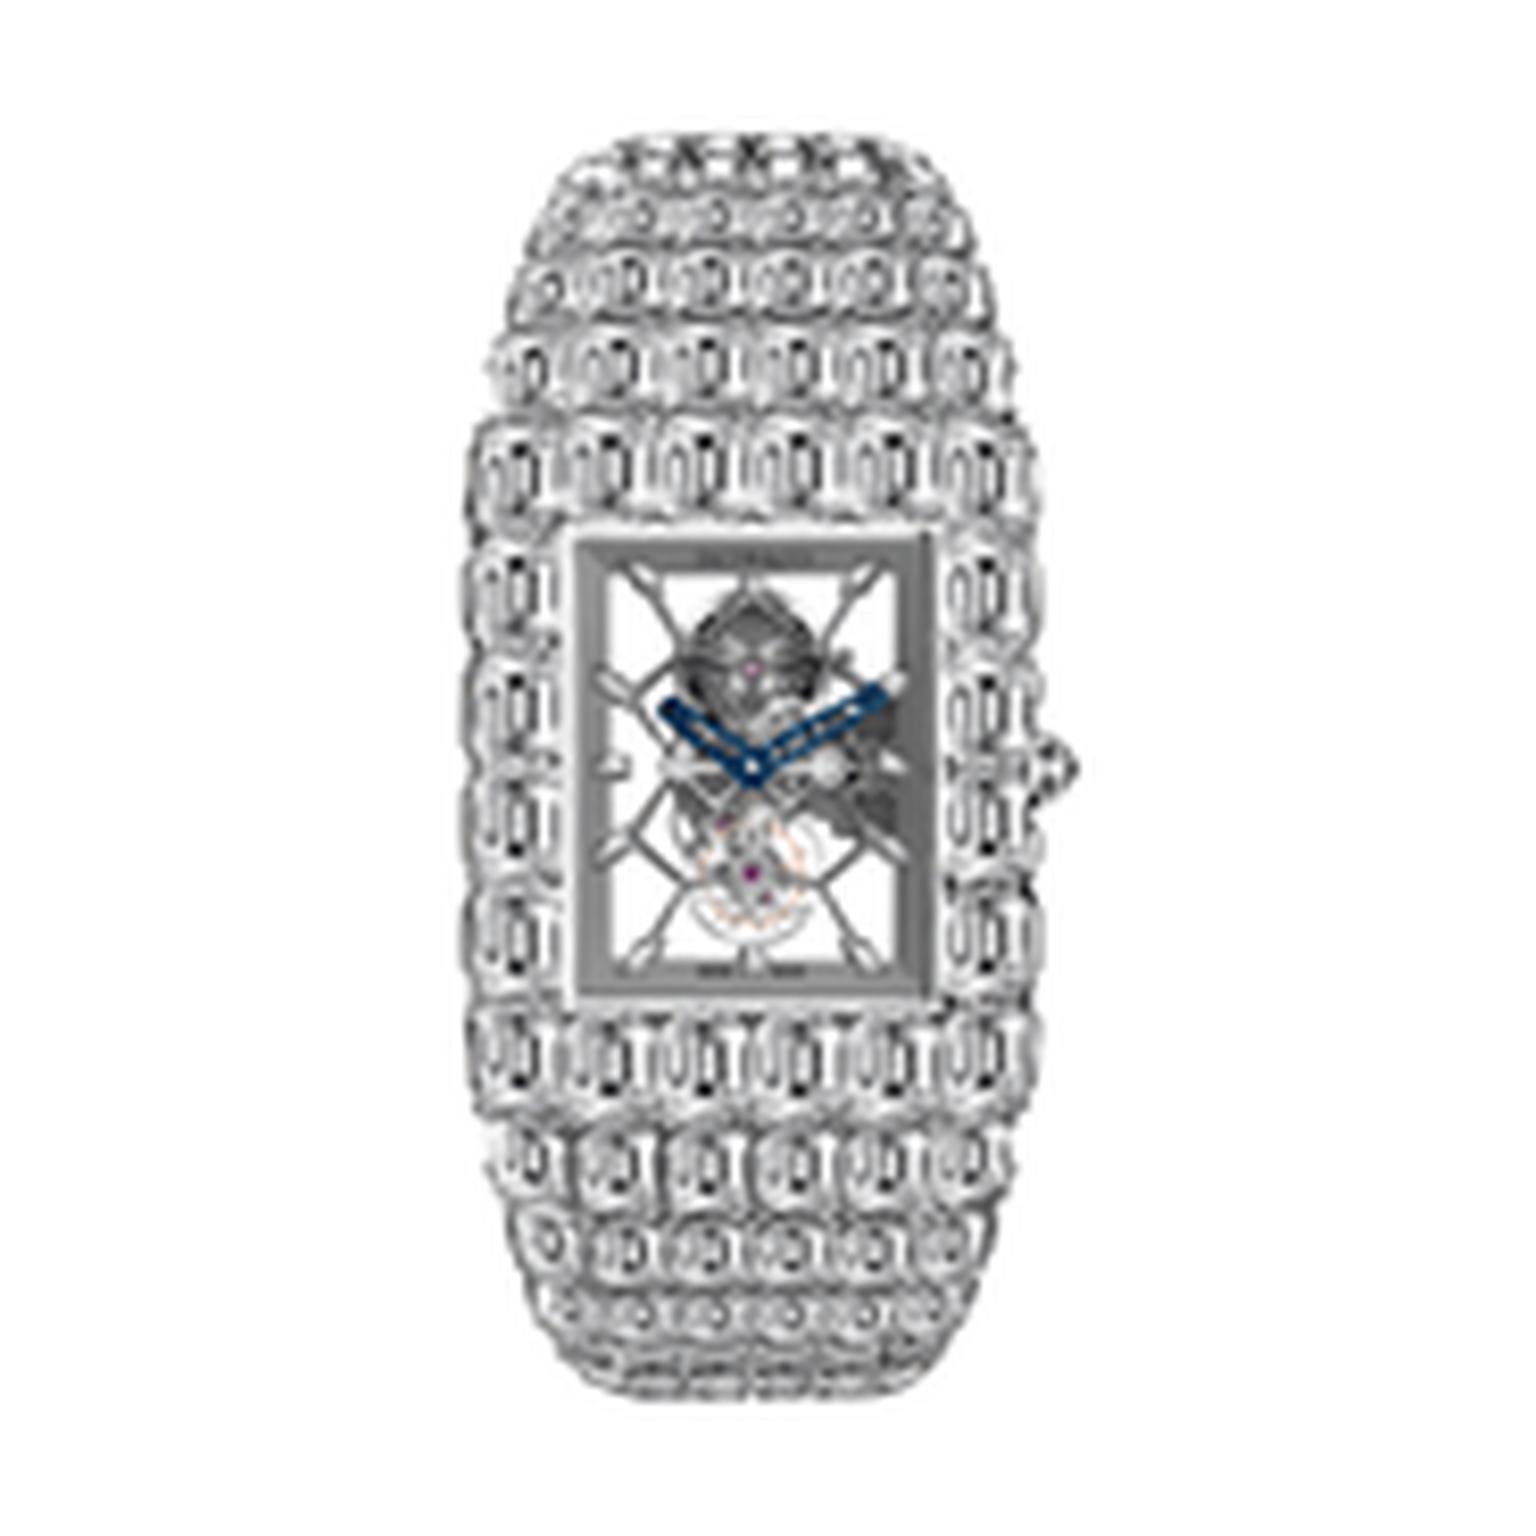 Jacob-&-Co-Billionaire-diamond-watch_thumb